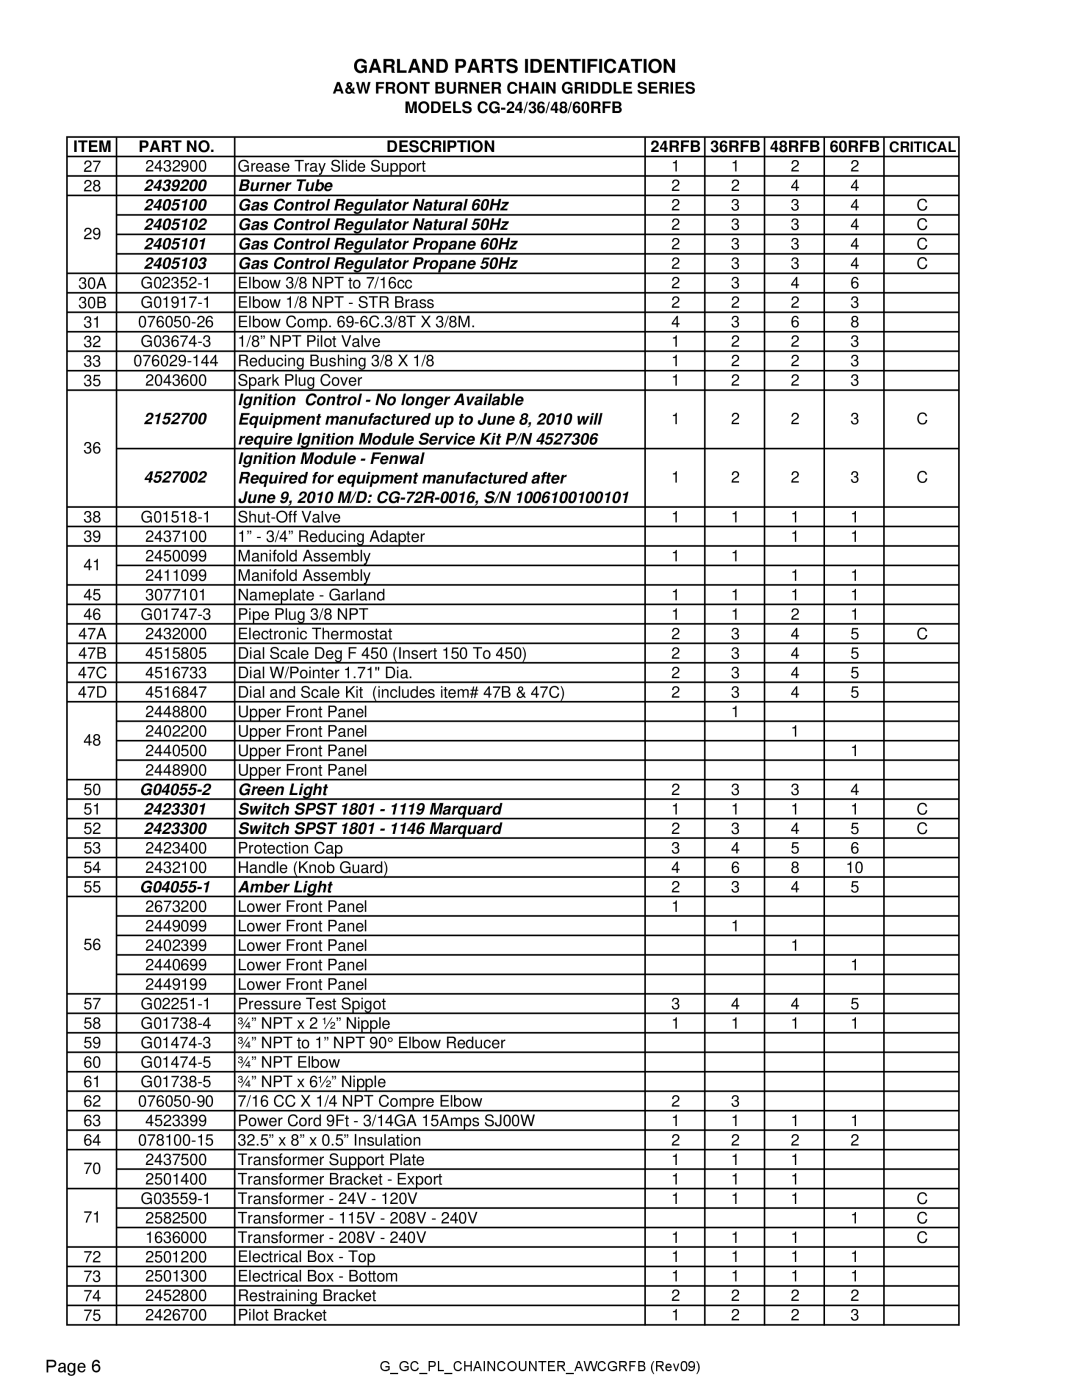 Garland Garland Parts Identification, A&W Front Burner Chain Griddle Series, MODELS CG-24/36/48/60RFB, Description 